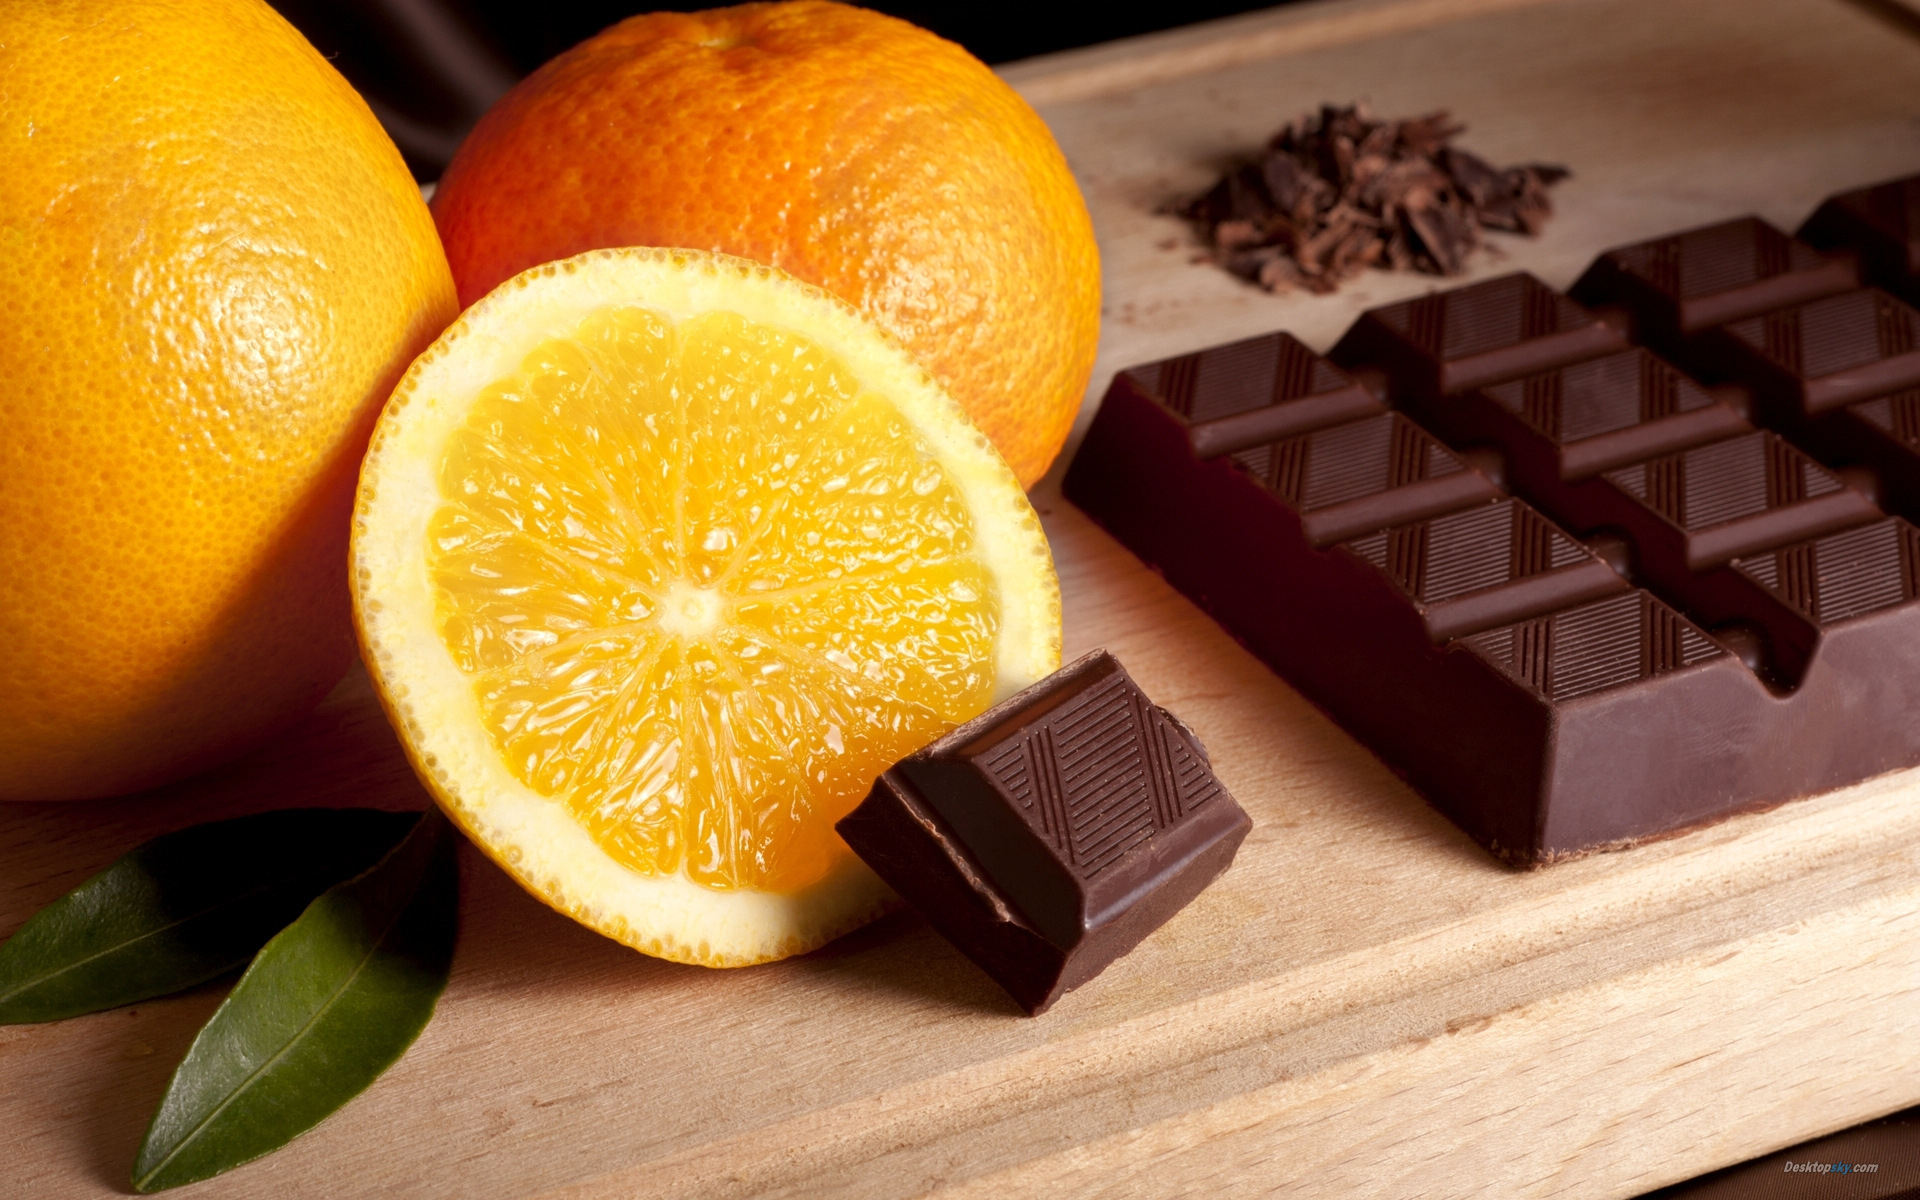 Chocolate And Oranges